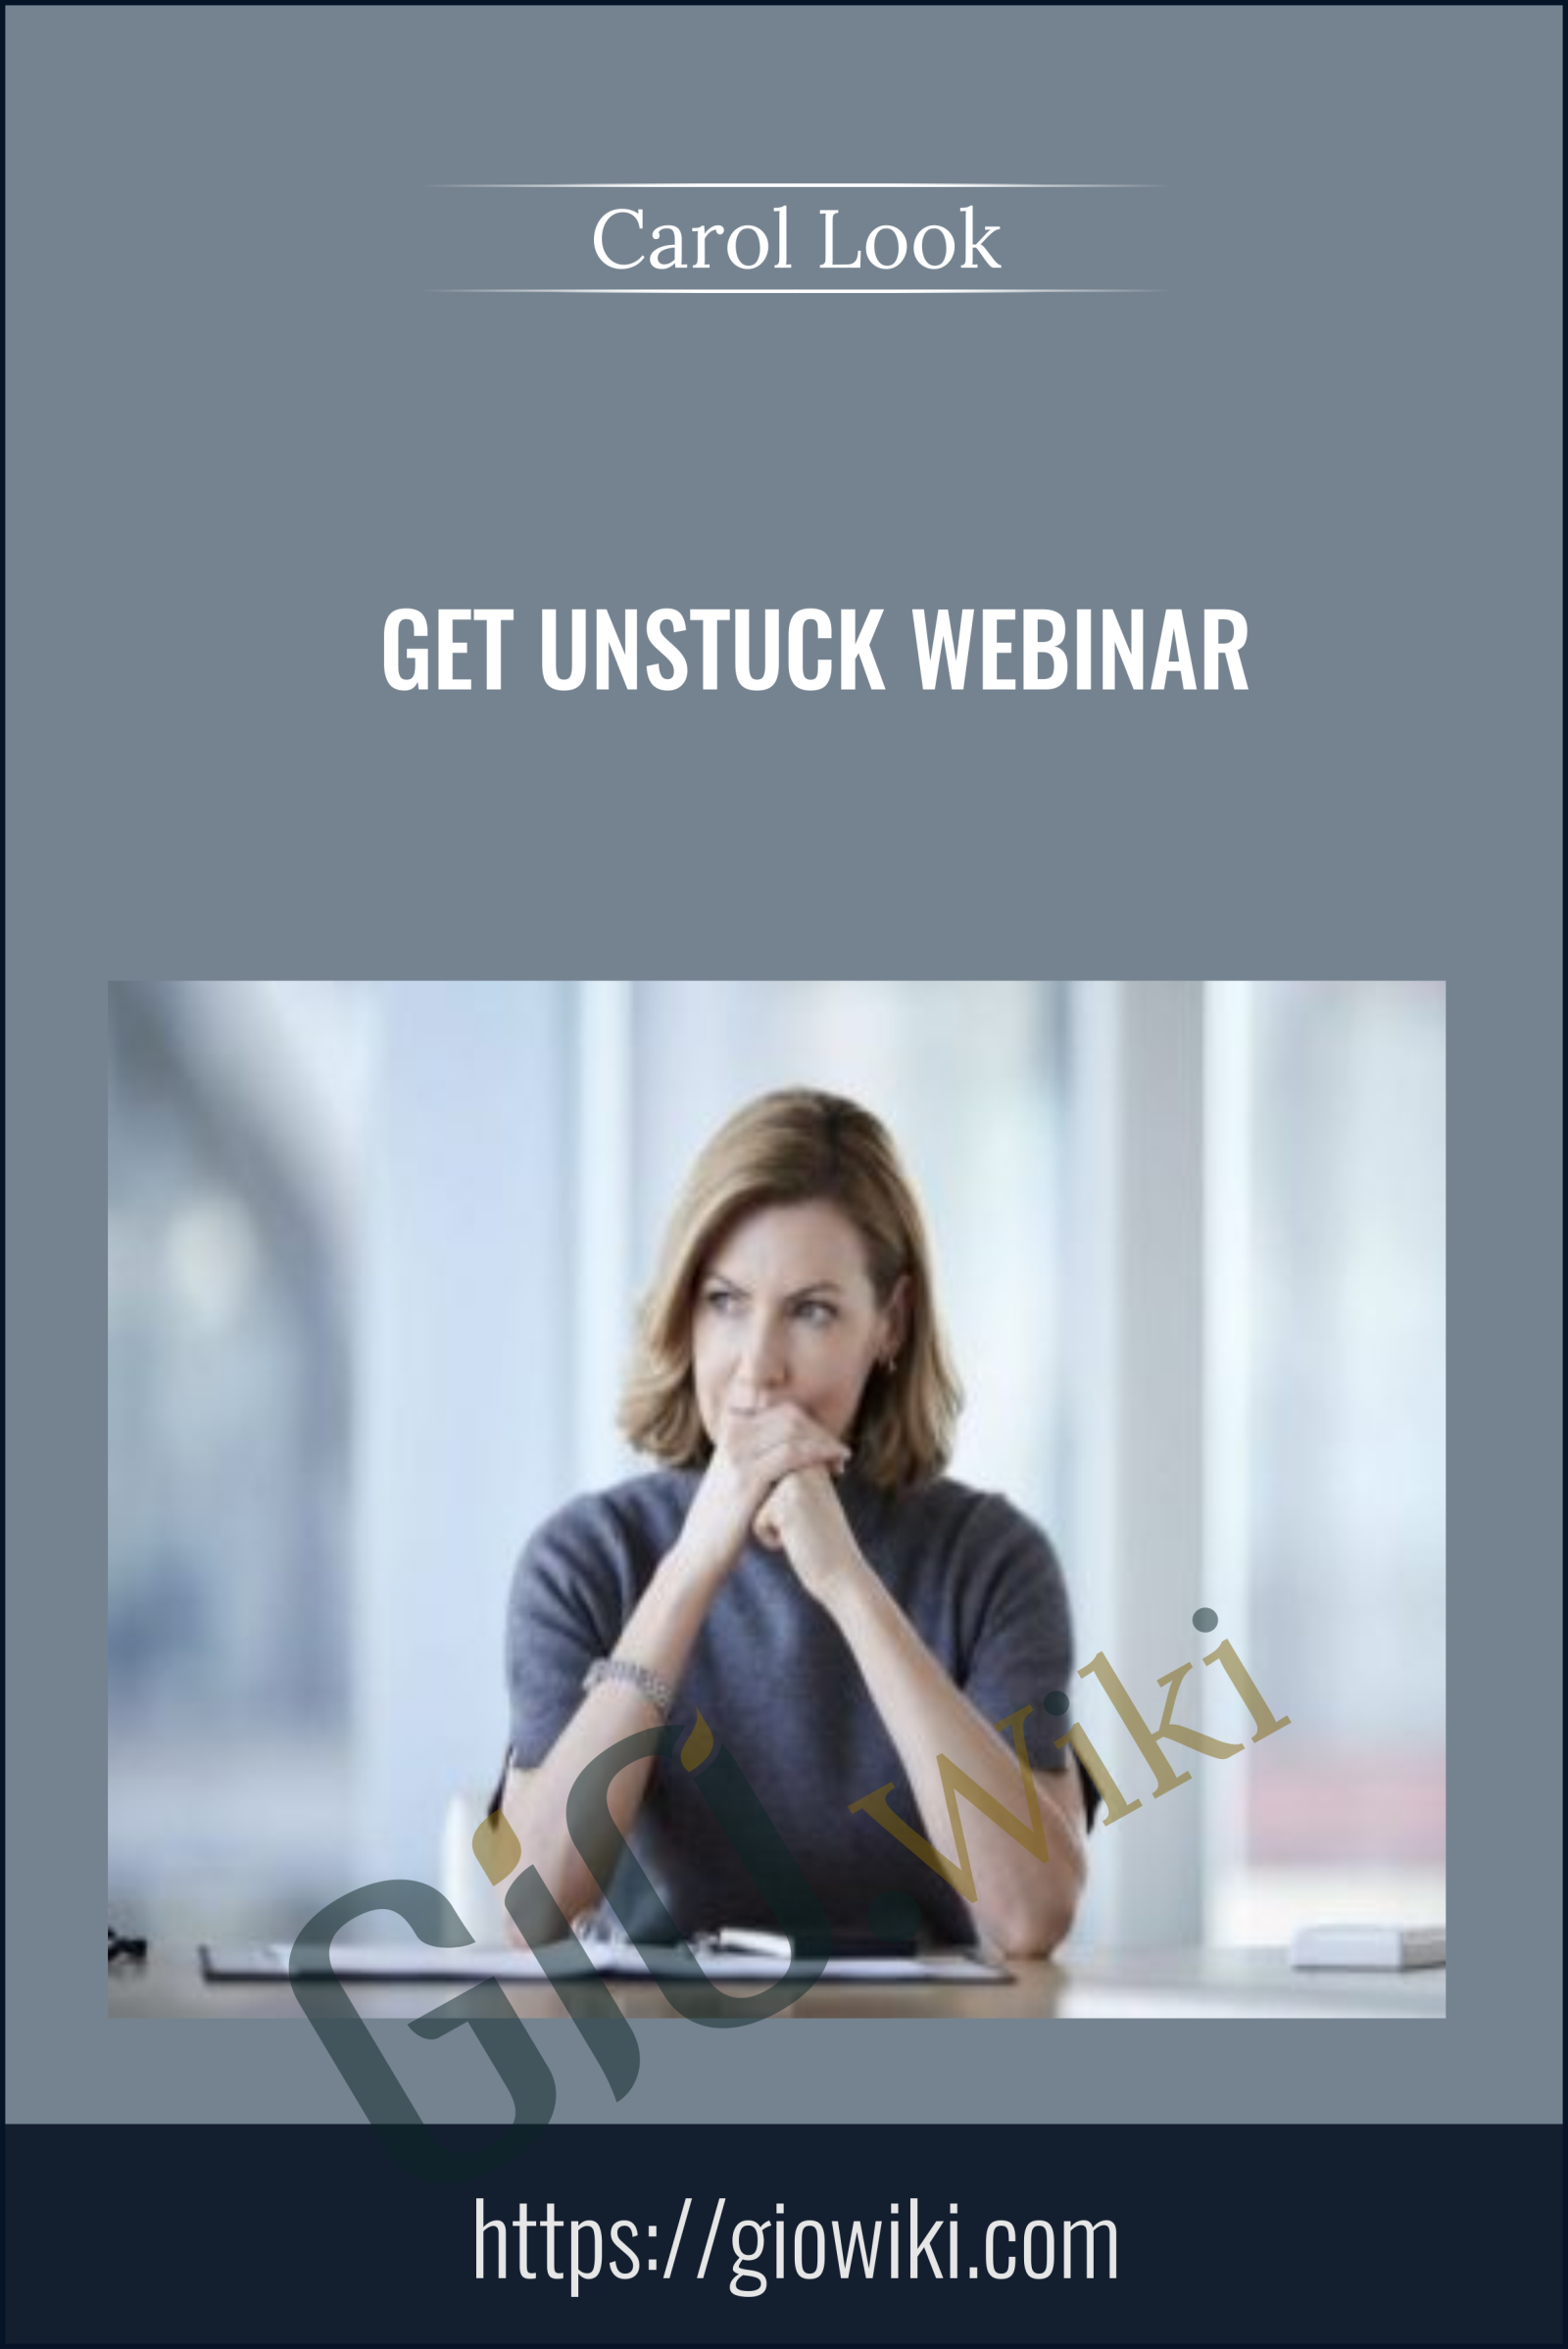 Get Unstuck Webinar - Carol Look